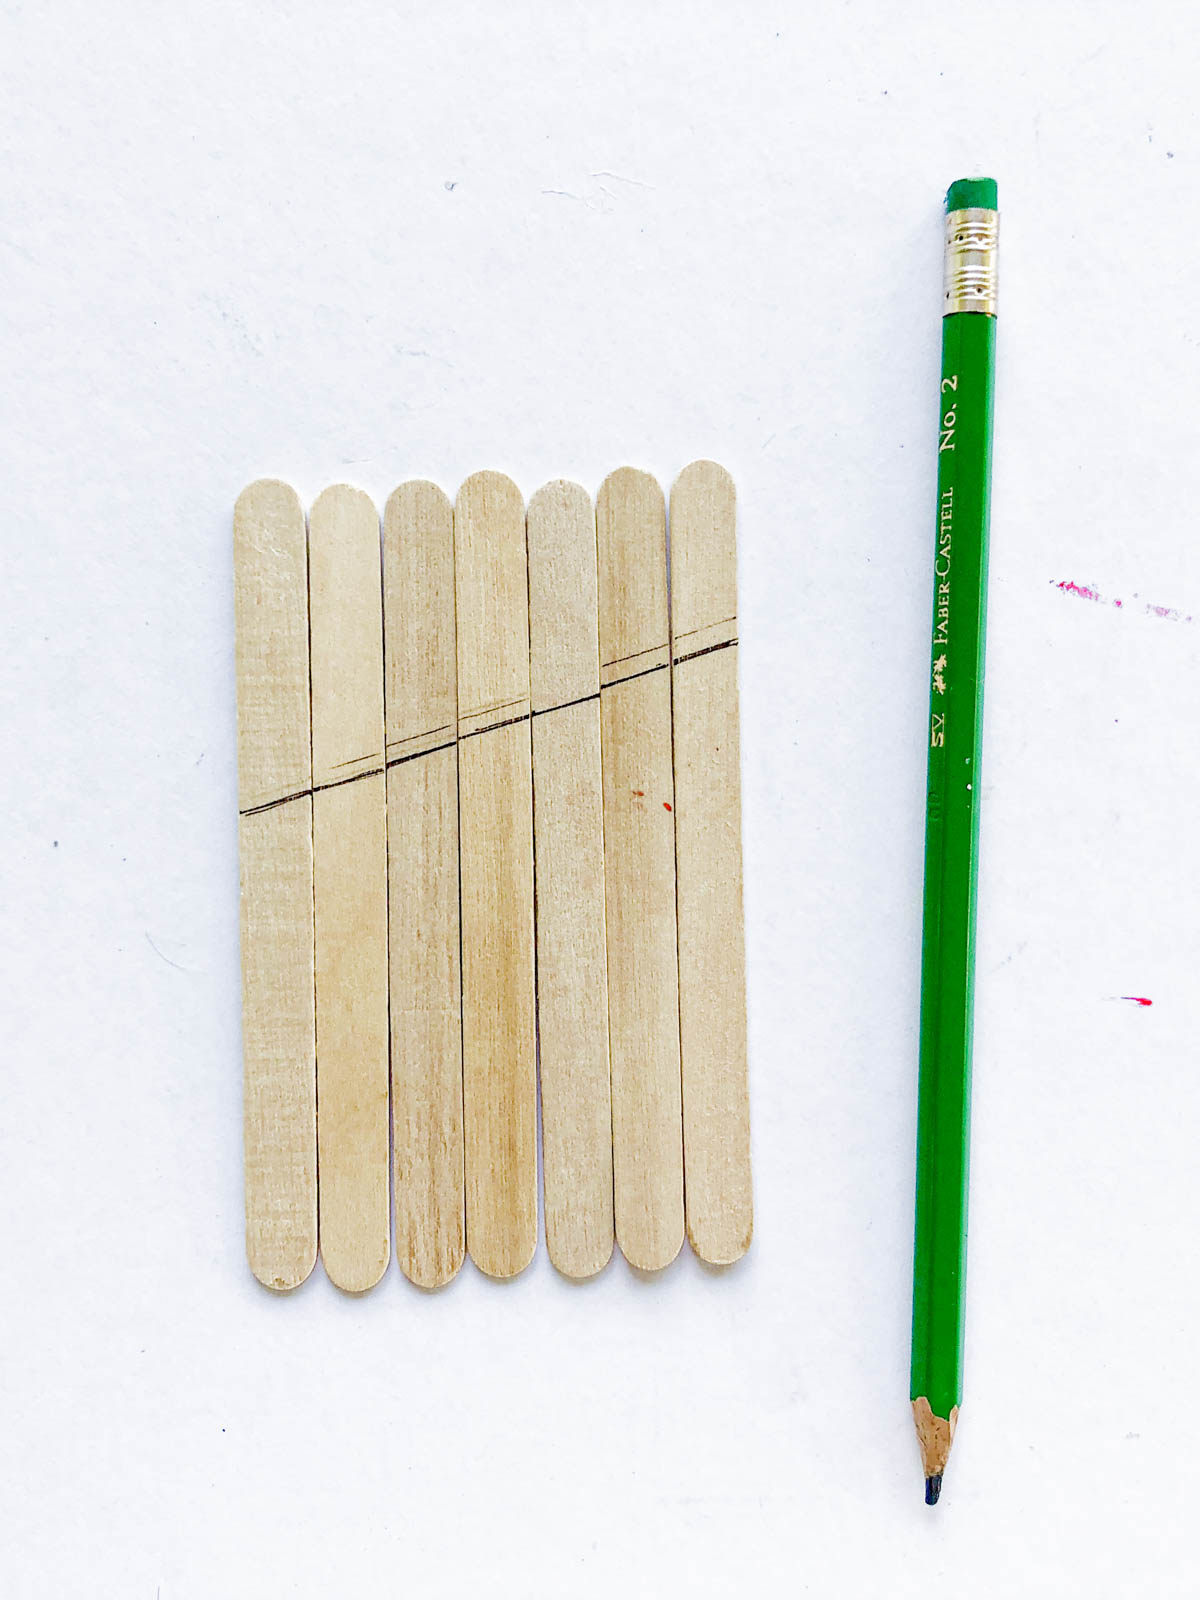 line drawn across popsicle sticks